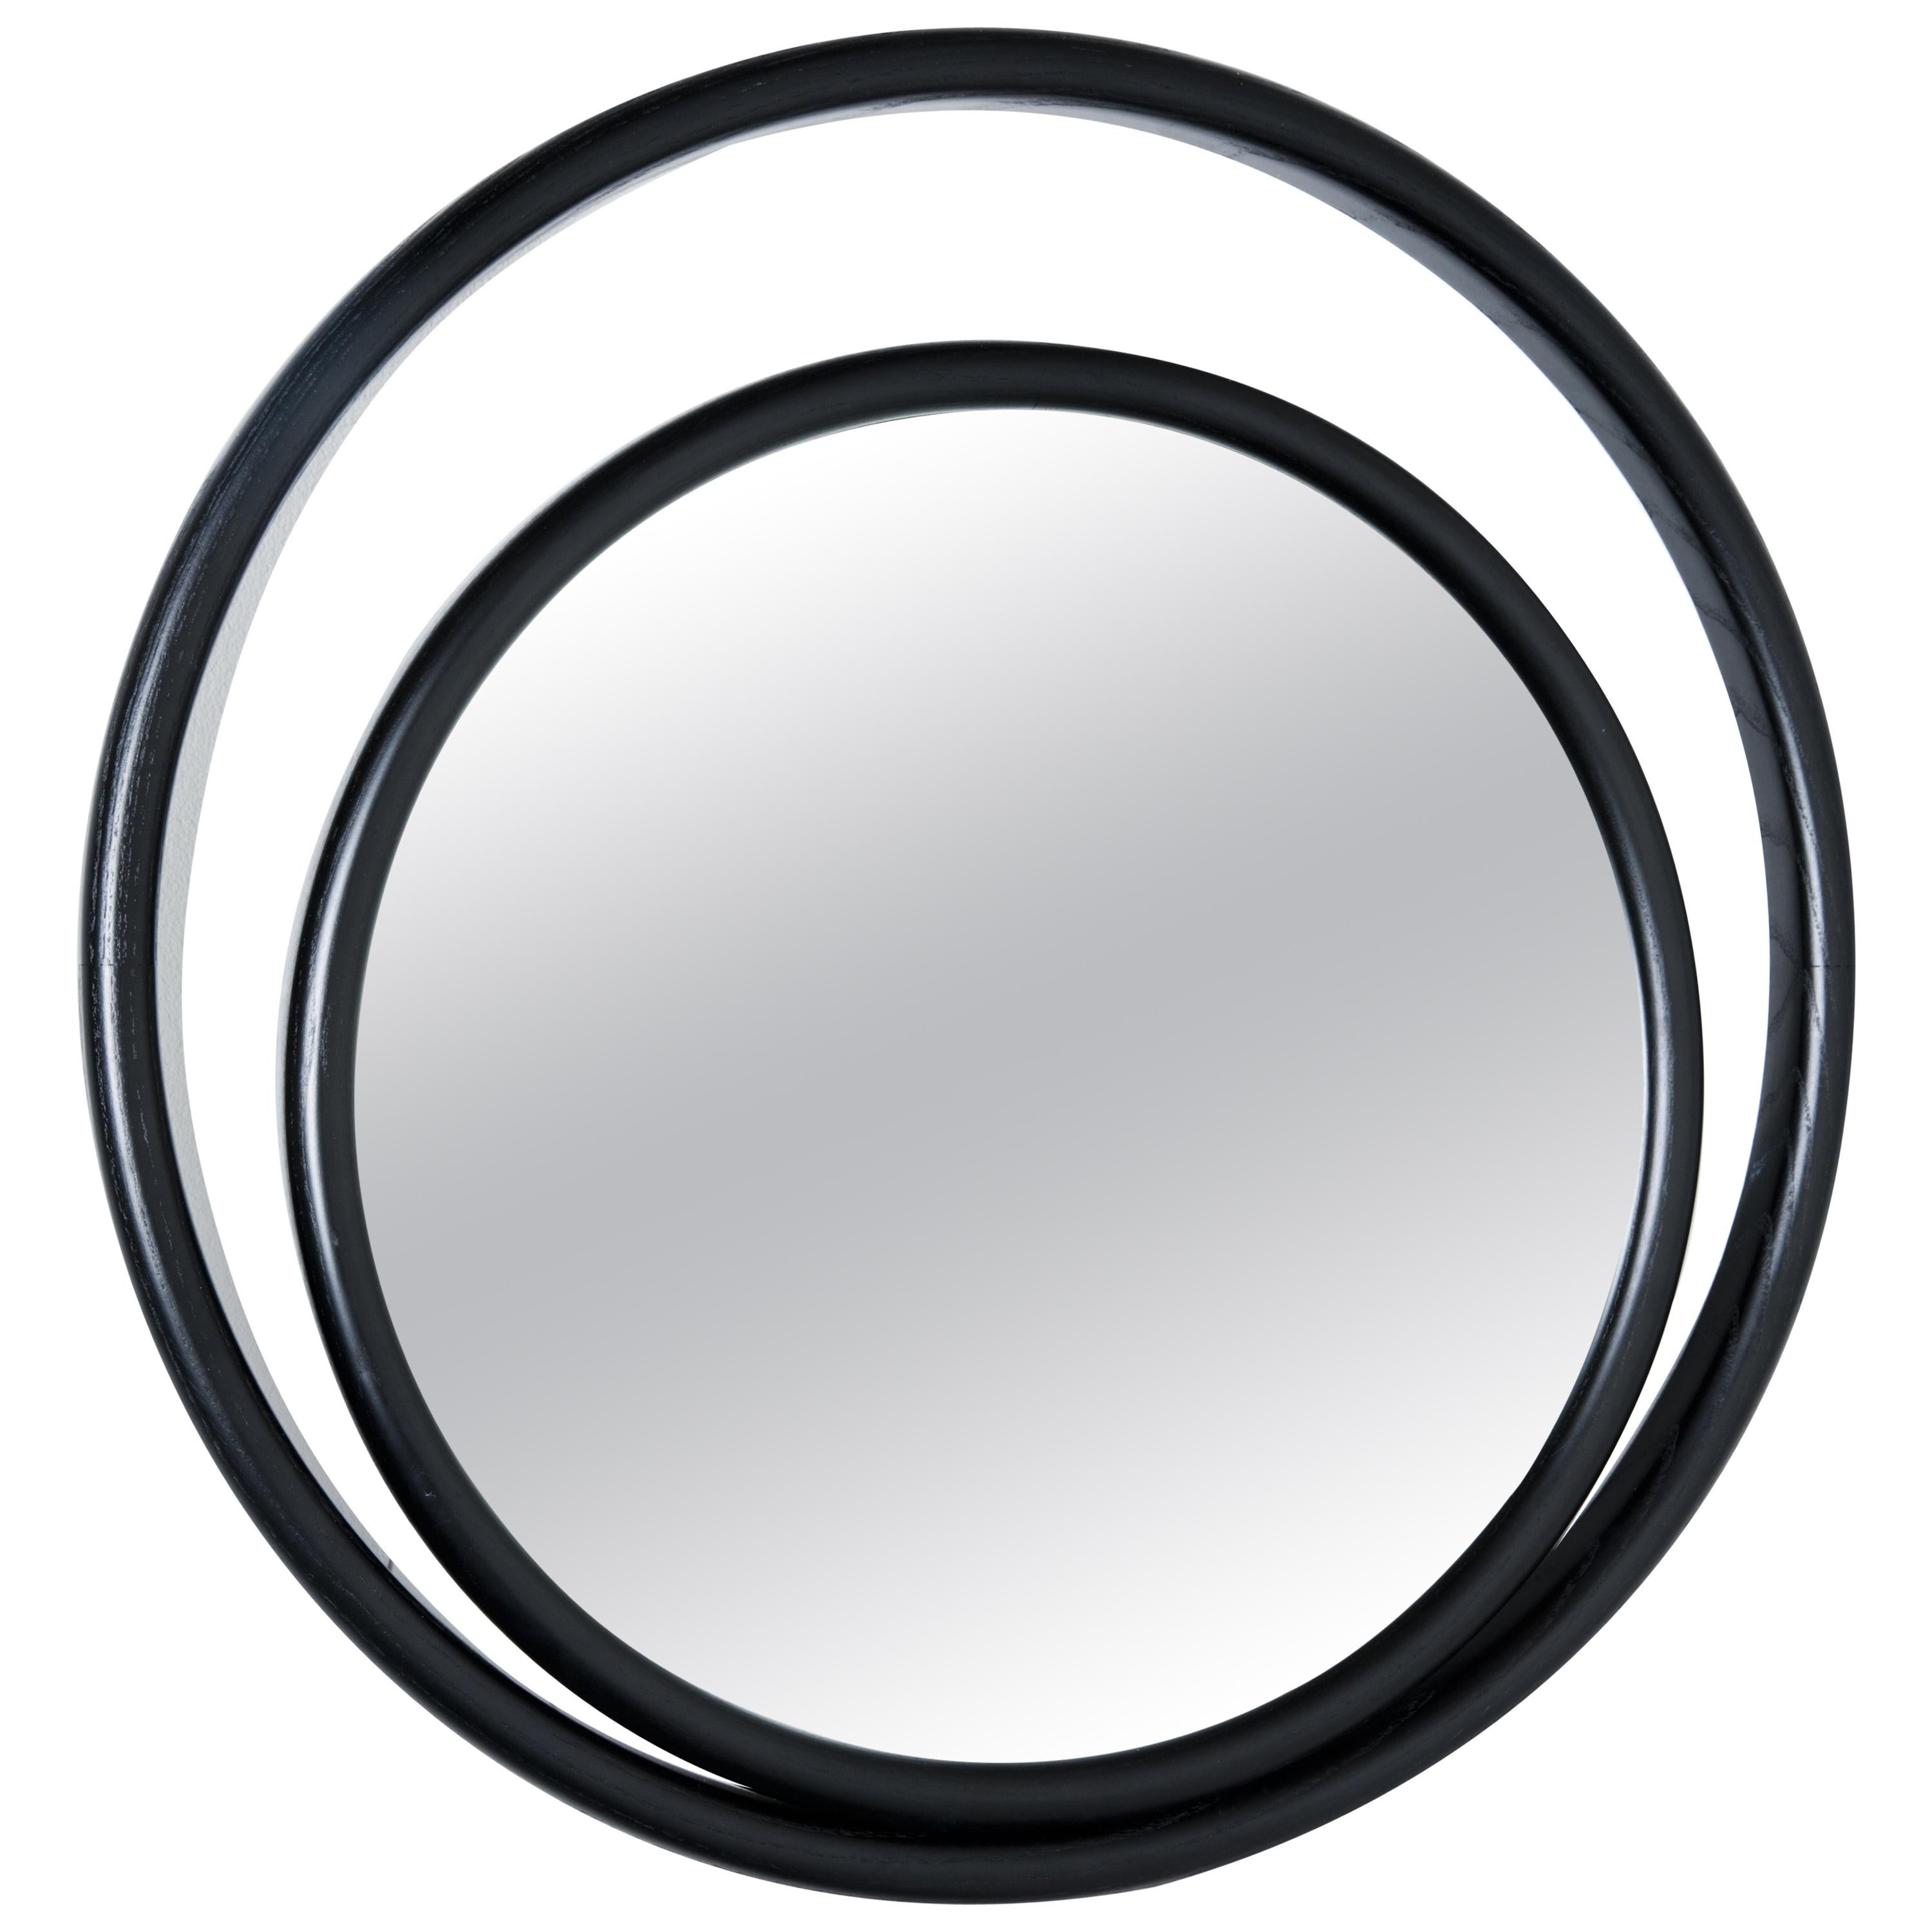 Gebrüder Thonet Vienna GmbH Eyeshine Large Circular Mirror in Black Wood Frame For Sale